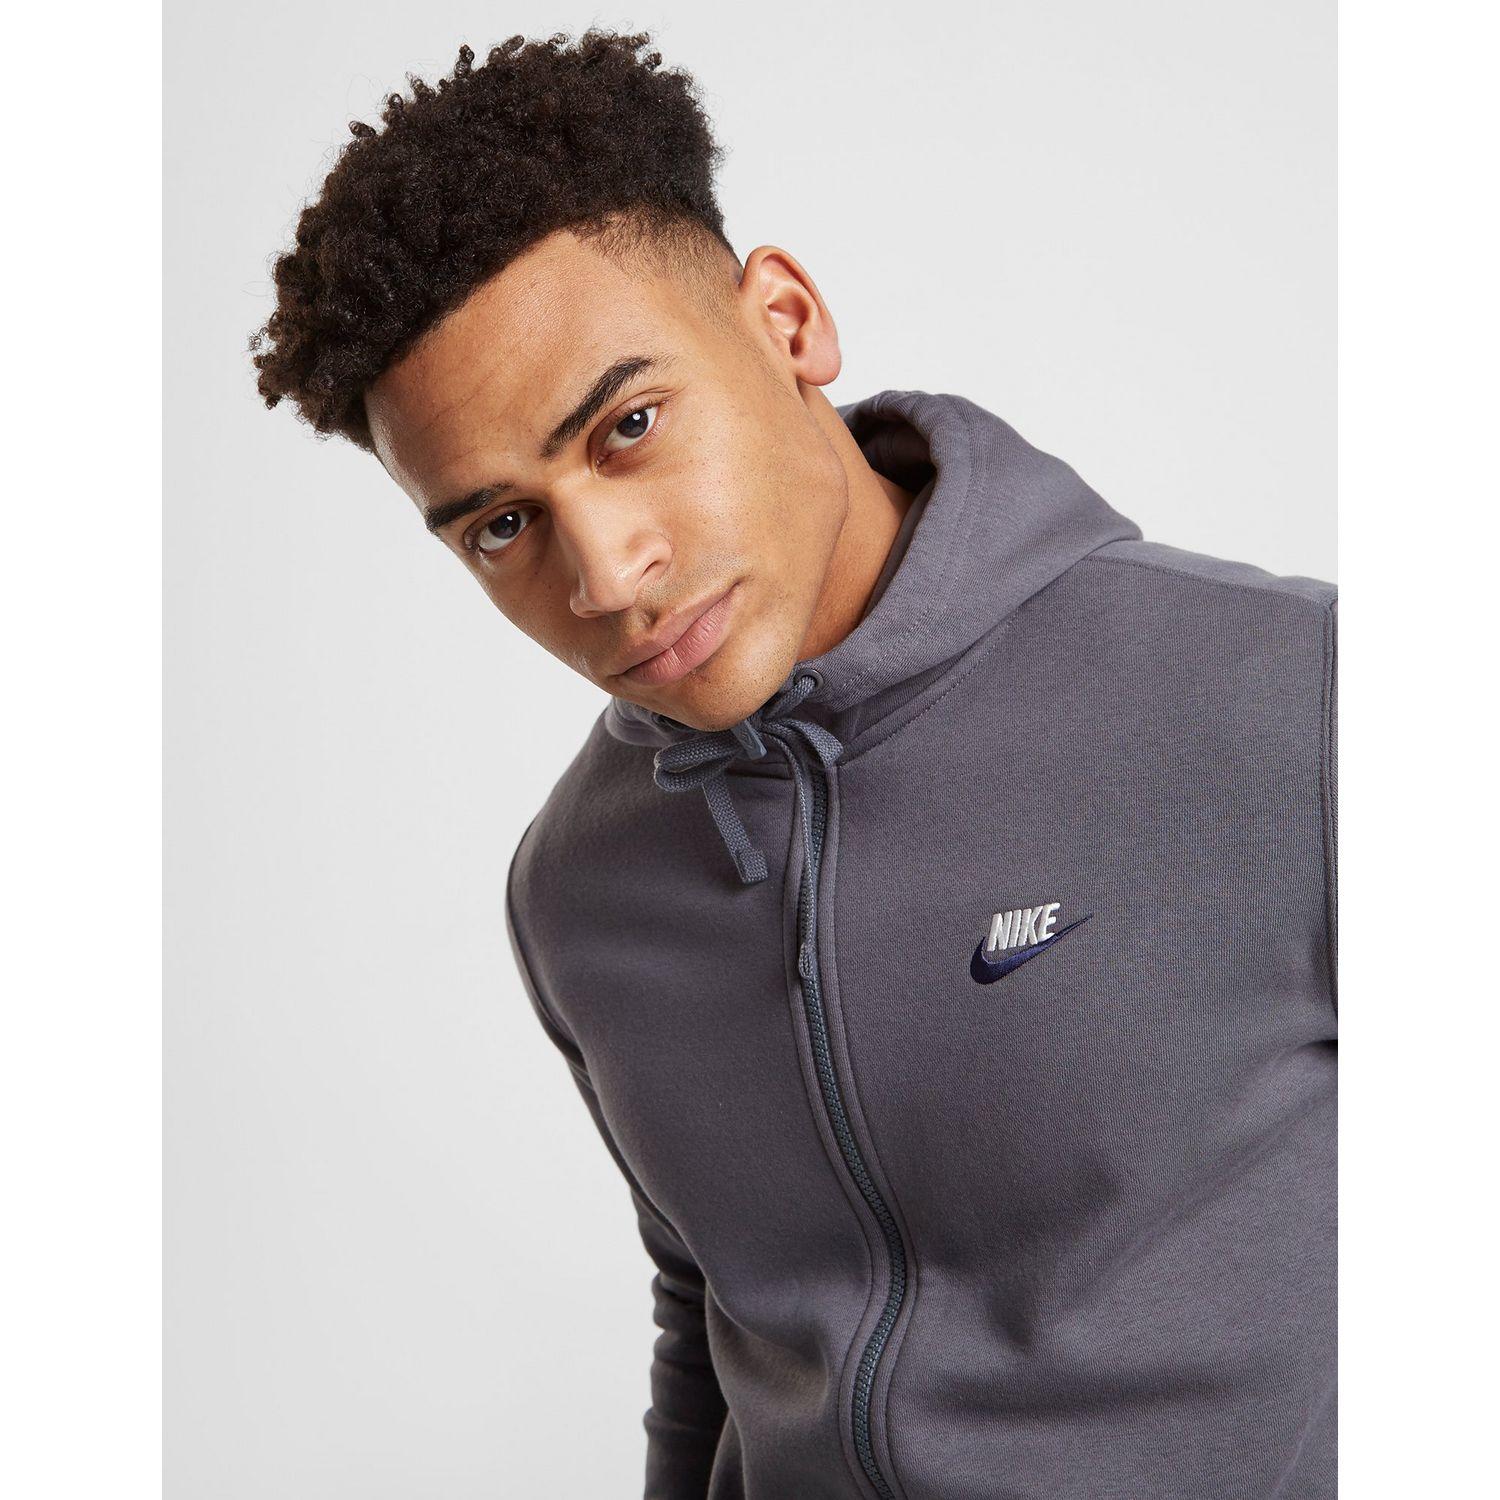 Nike Cotton Foundation Full Zip Hoodie in Grey (Grey) for Men - Lyst